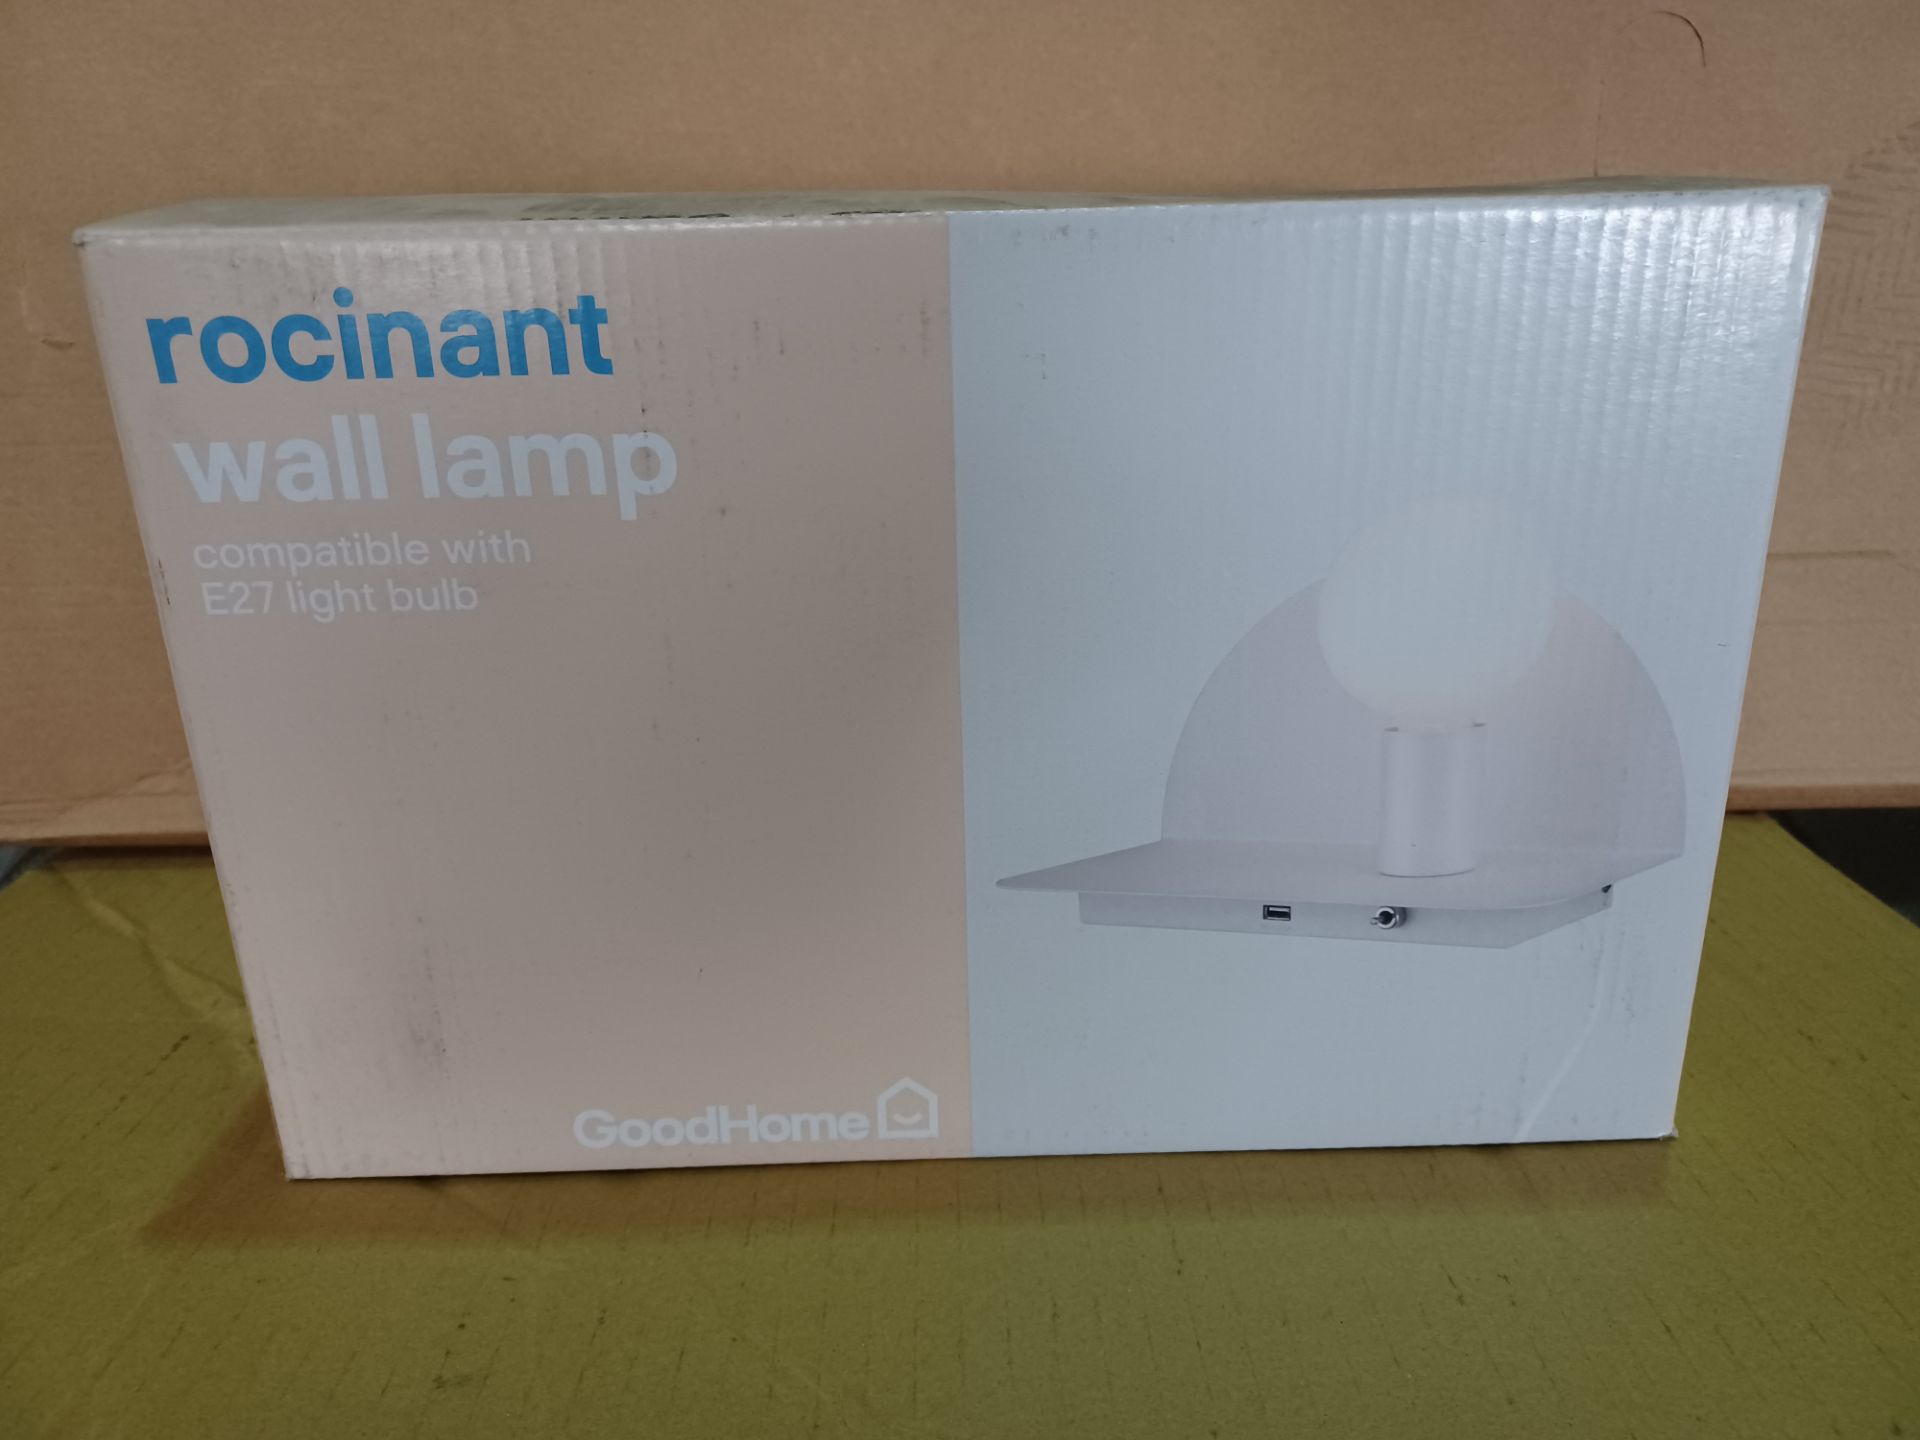 3 X BRAND NEW GOODGHOME ROCINANT WALL LAMP R15